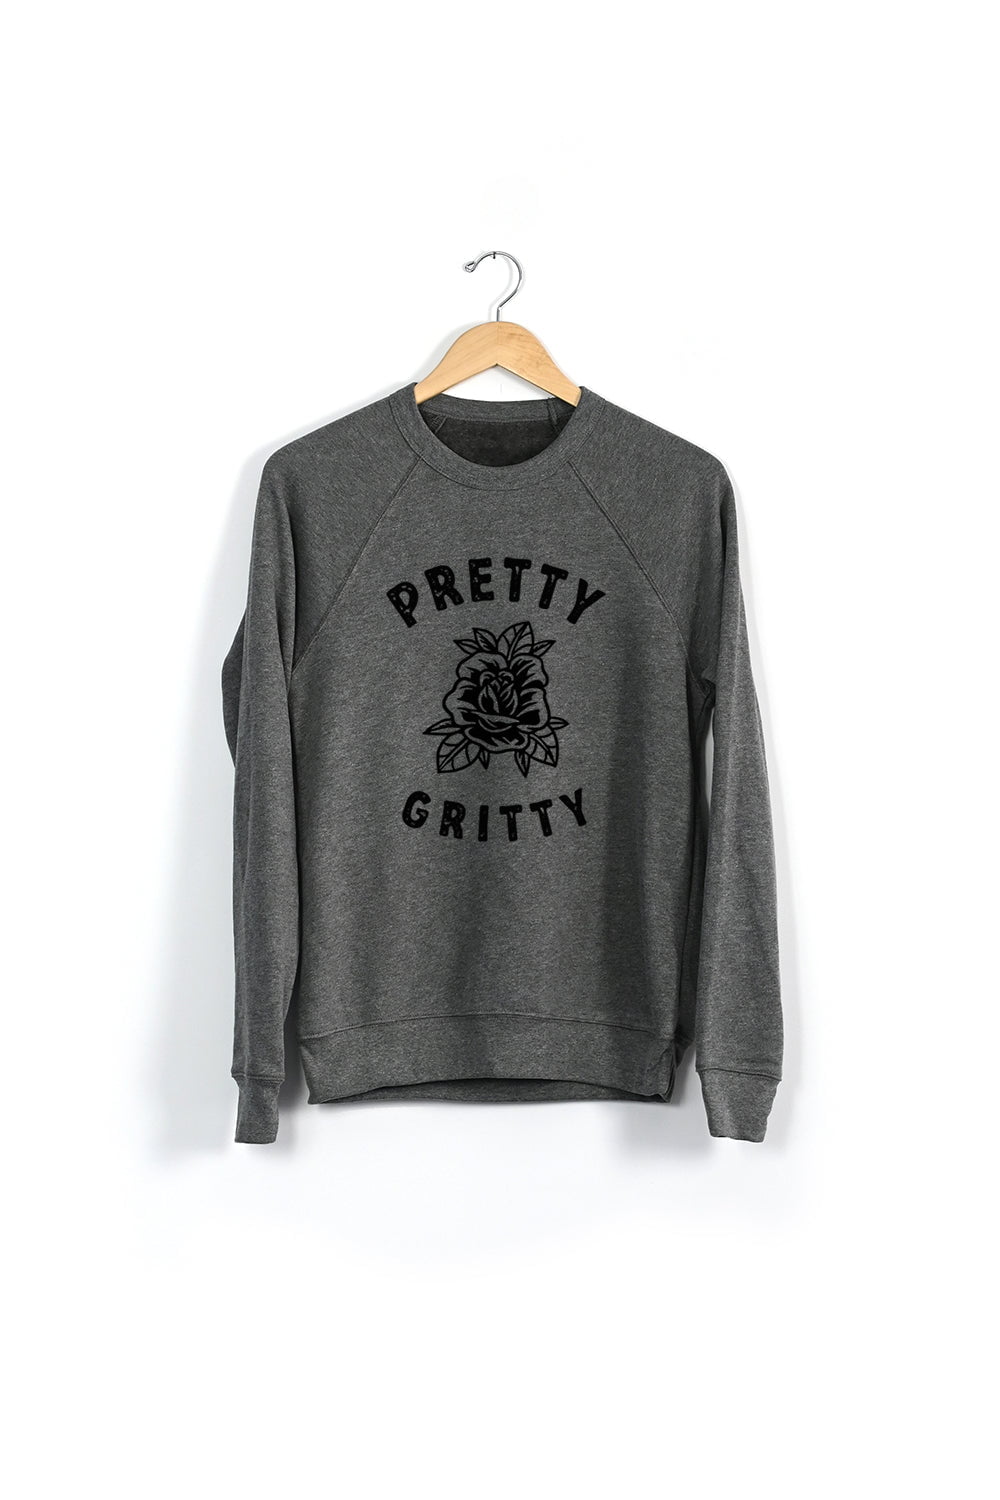 Sarah Marie Design Studio Sweatshirt Pretty Gritty Sweatshirt